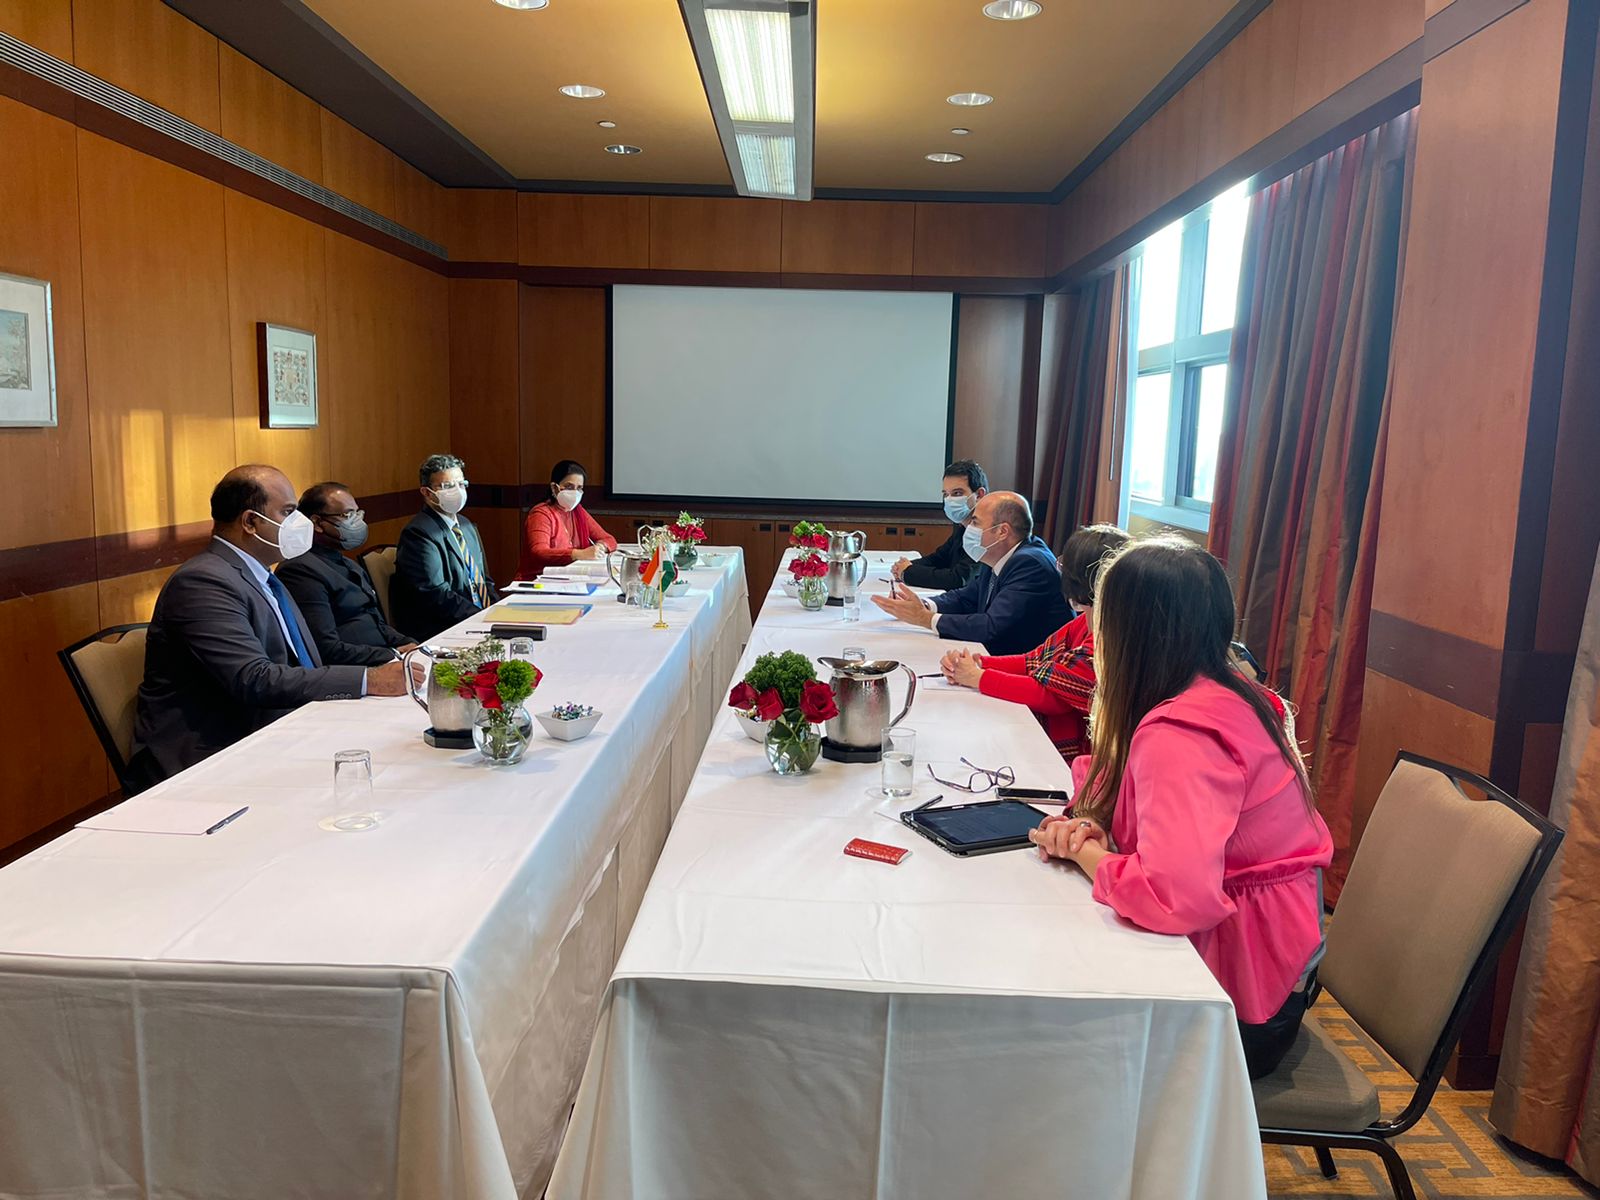 Bilateral meeting held between the CAG of India, Mr.Girish Chandra Murmu and Sr Jorge Bermúdez Soto - Comptroller General of the Republic of Chile on the side-lines of the UN Panel meeting held on 6-7th December, 2021